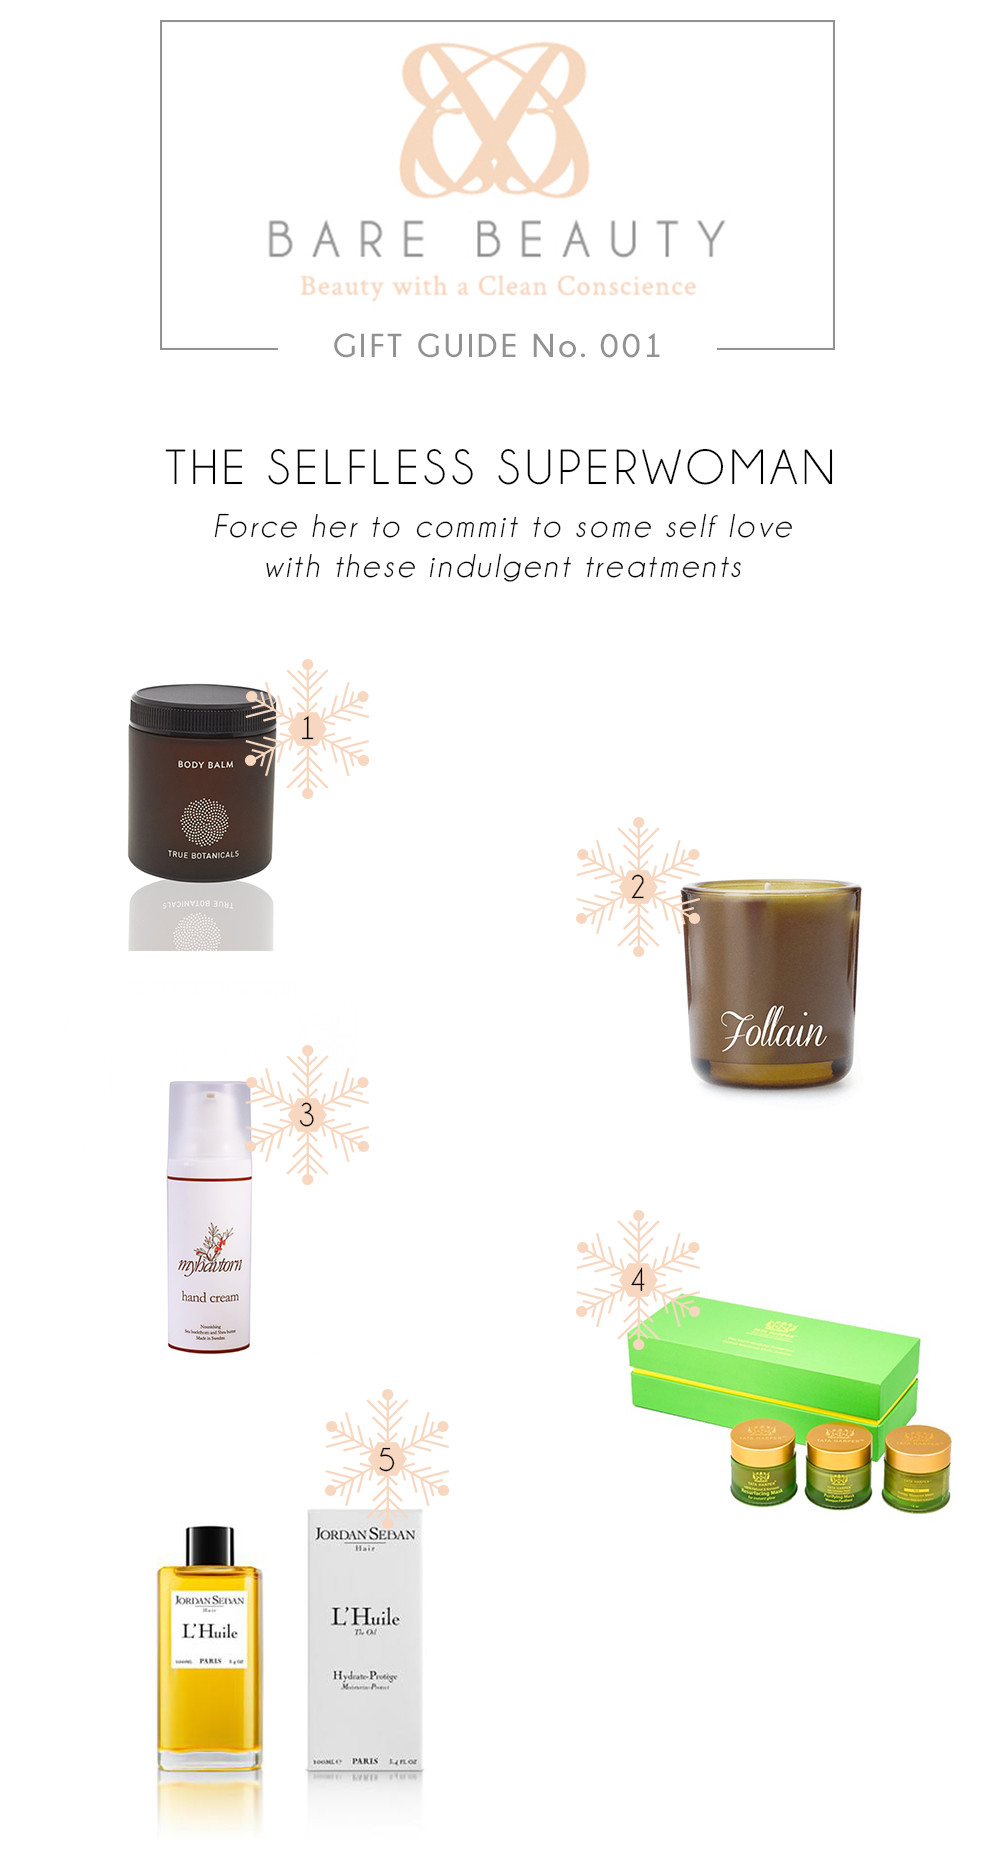 The Selfless Superwoman Gift Guide on barebeauty.com